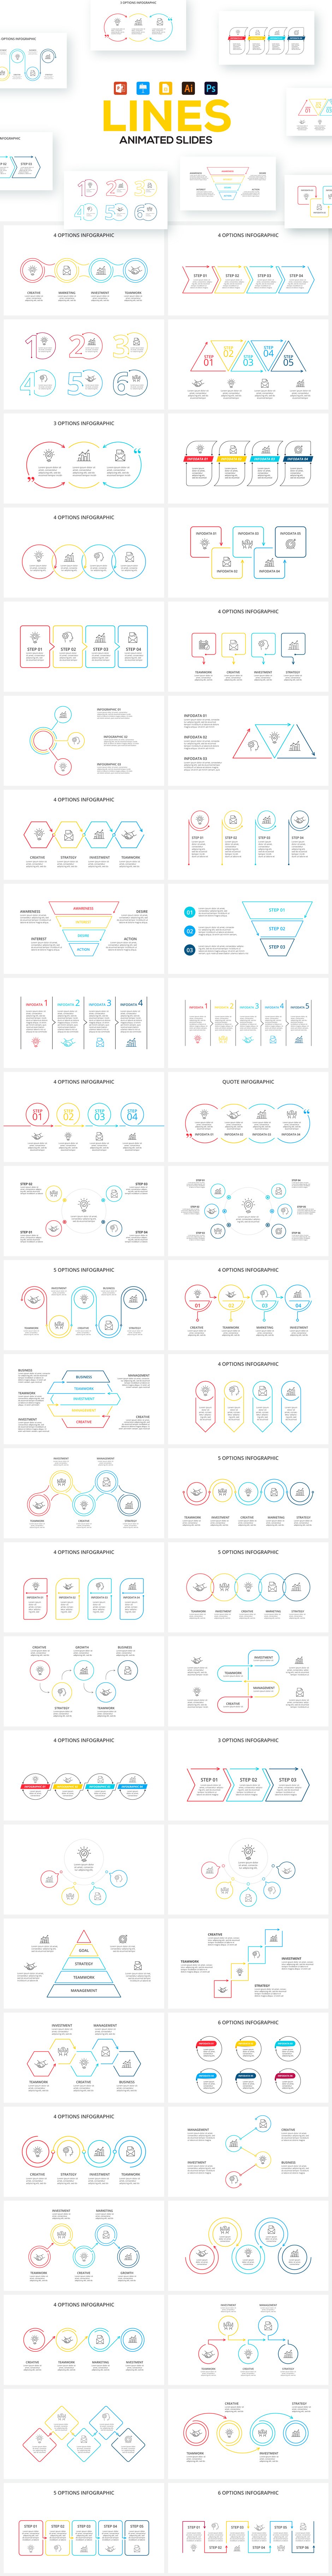 Infographic Templates Presentations